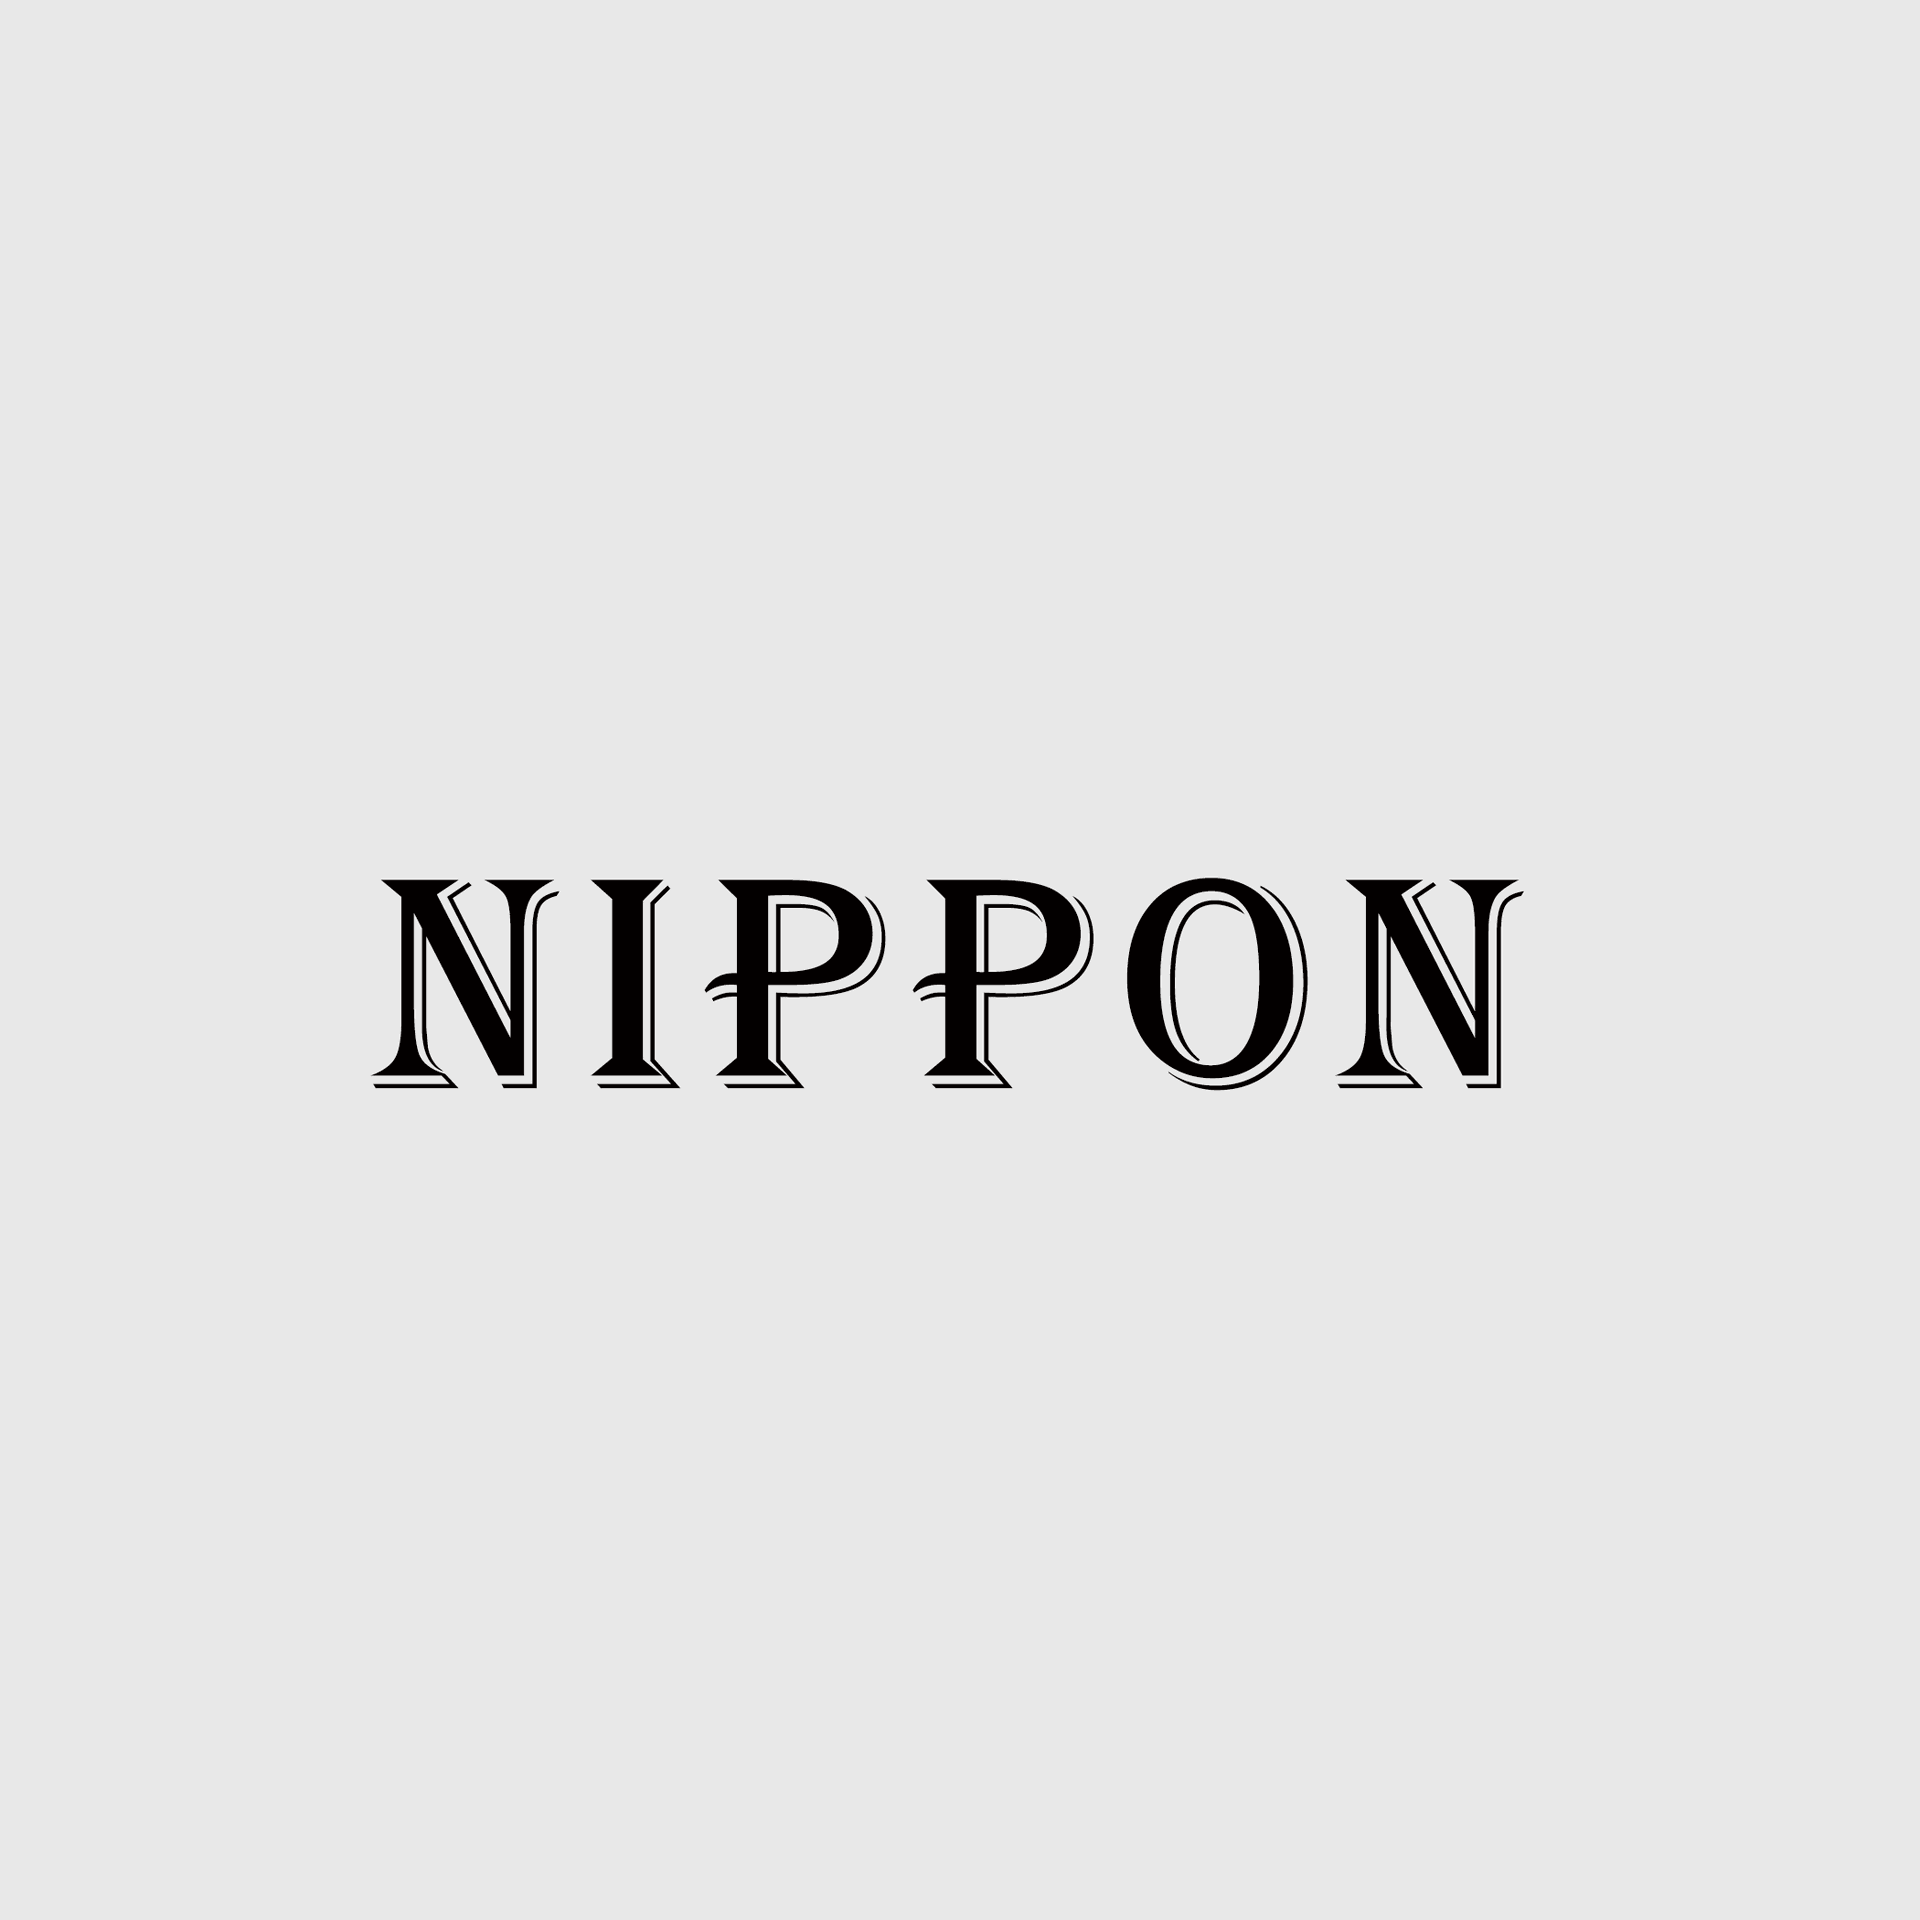 Product Brand: NIPPON